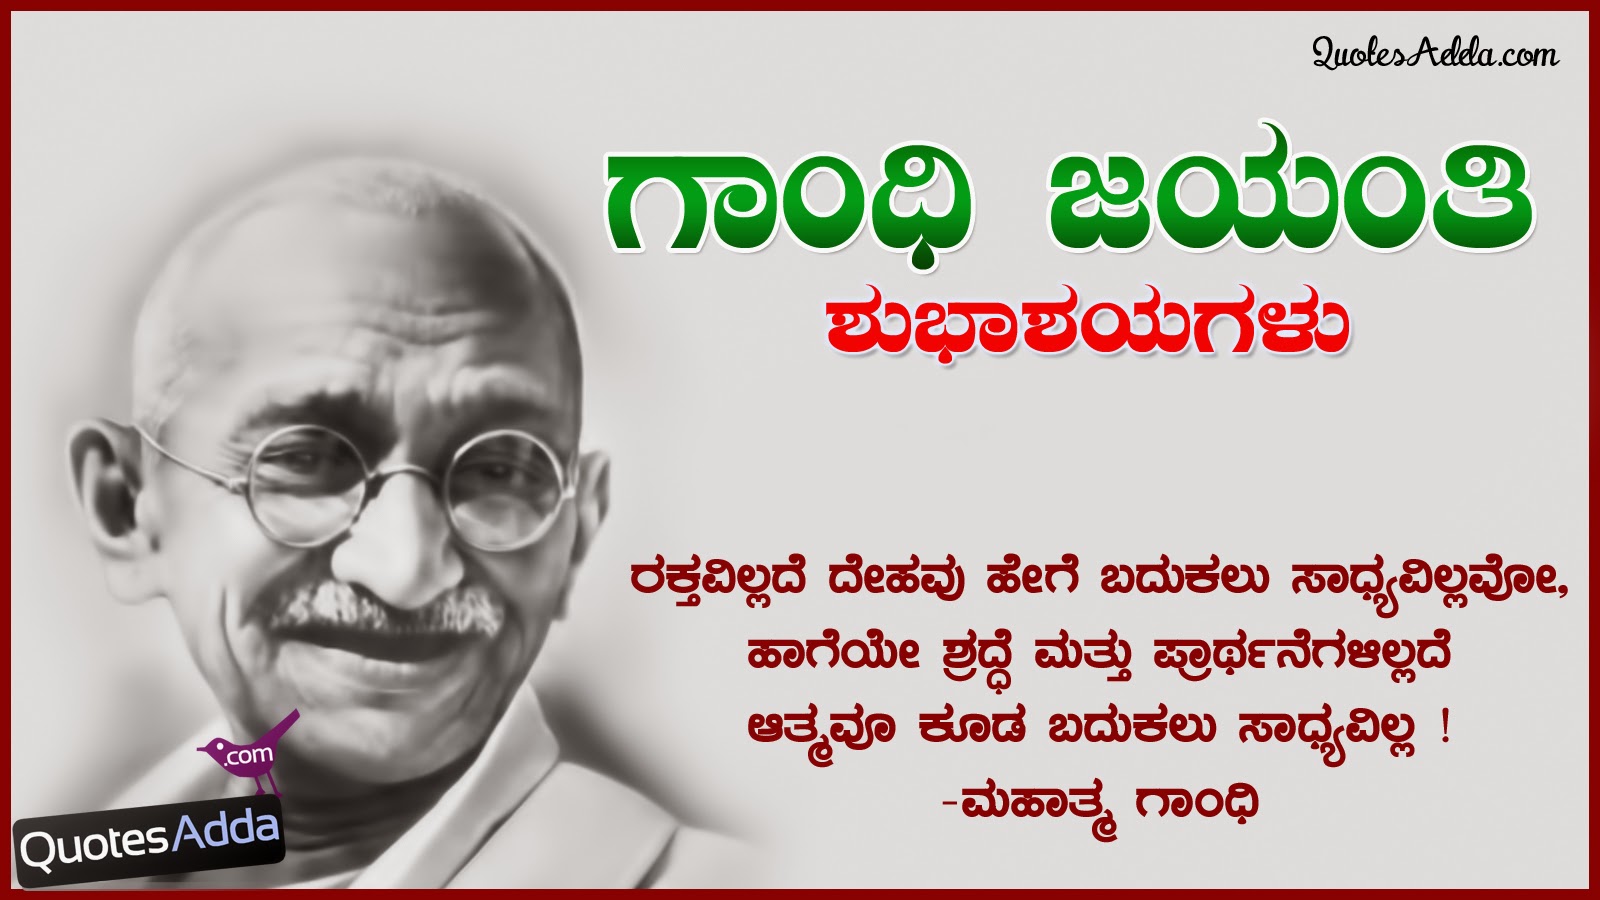 Kannada Mahatma Gandhi Jayanti Quotes and Greetings | QuotesAdda.com